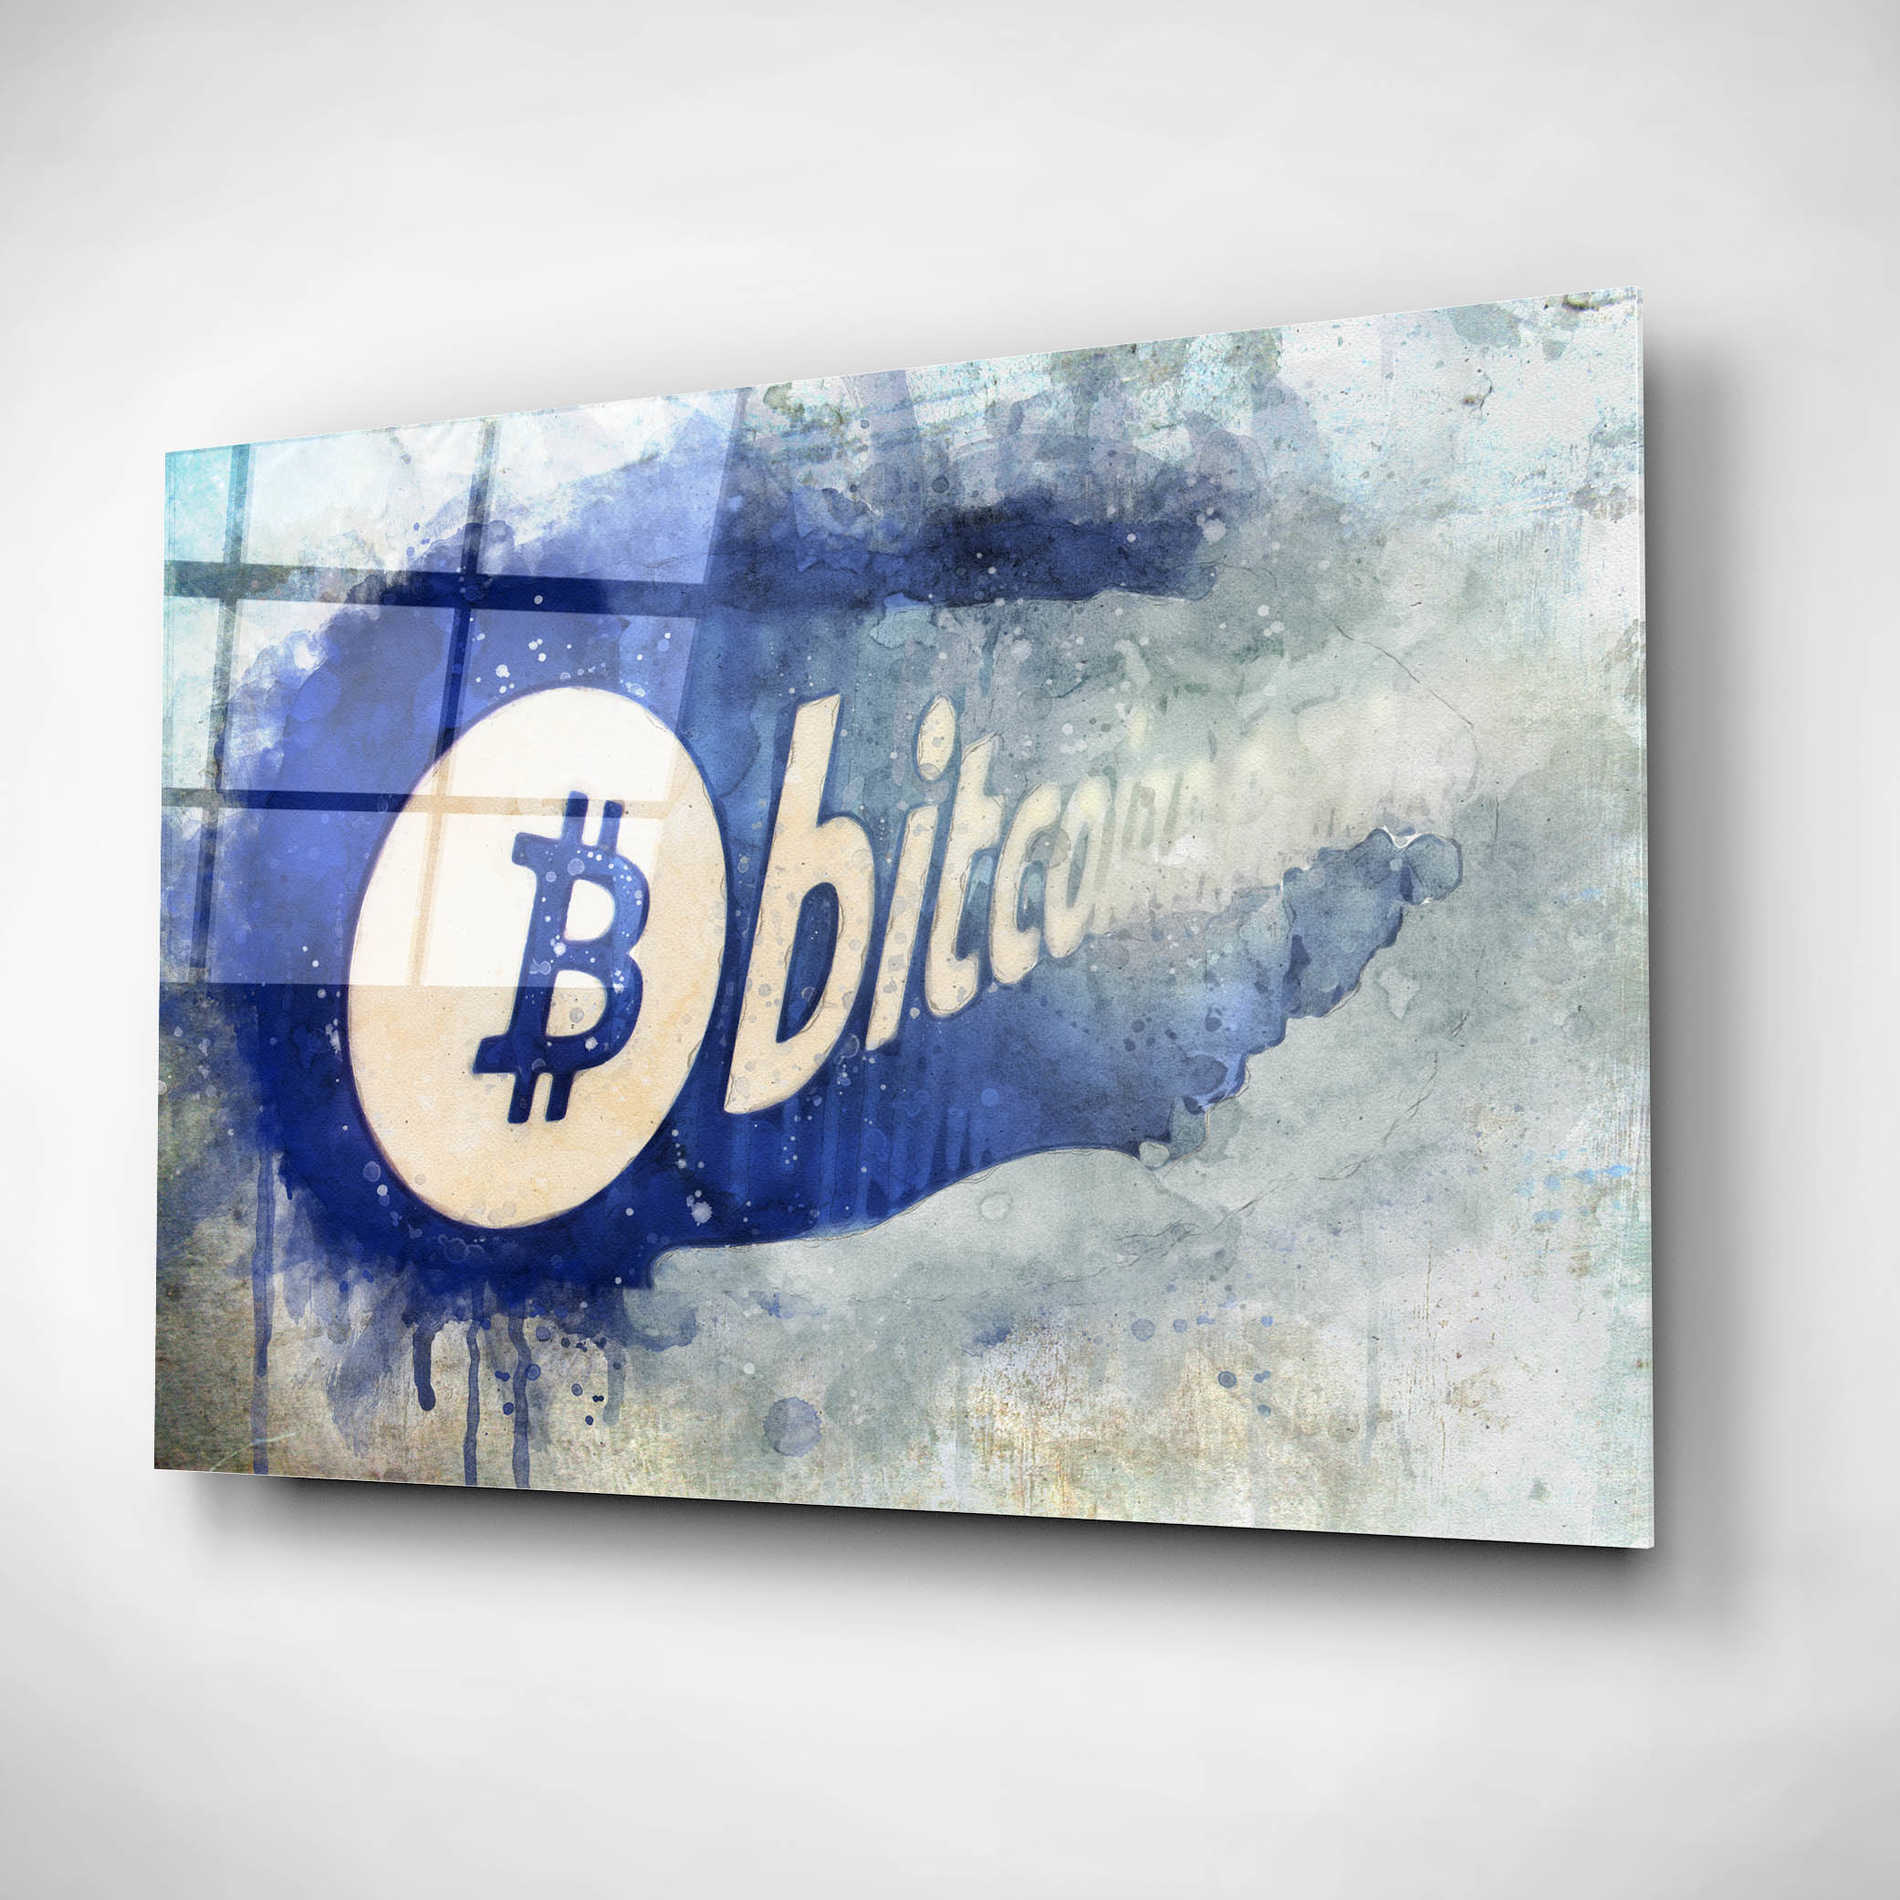 Epic Art 'Bitcoin Rule' by Surma and Guillen, Acrylic Glass Wall Art,24x16